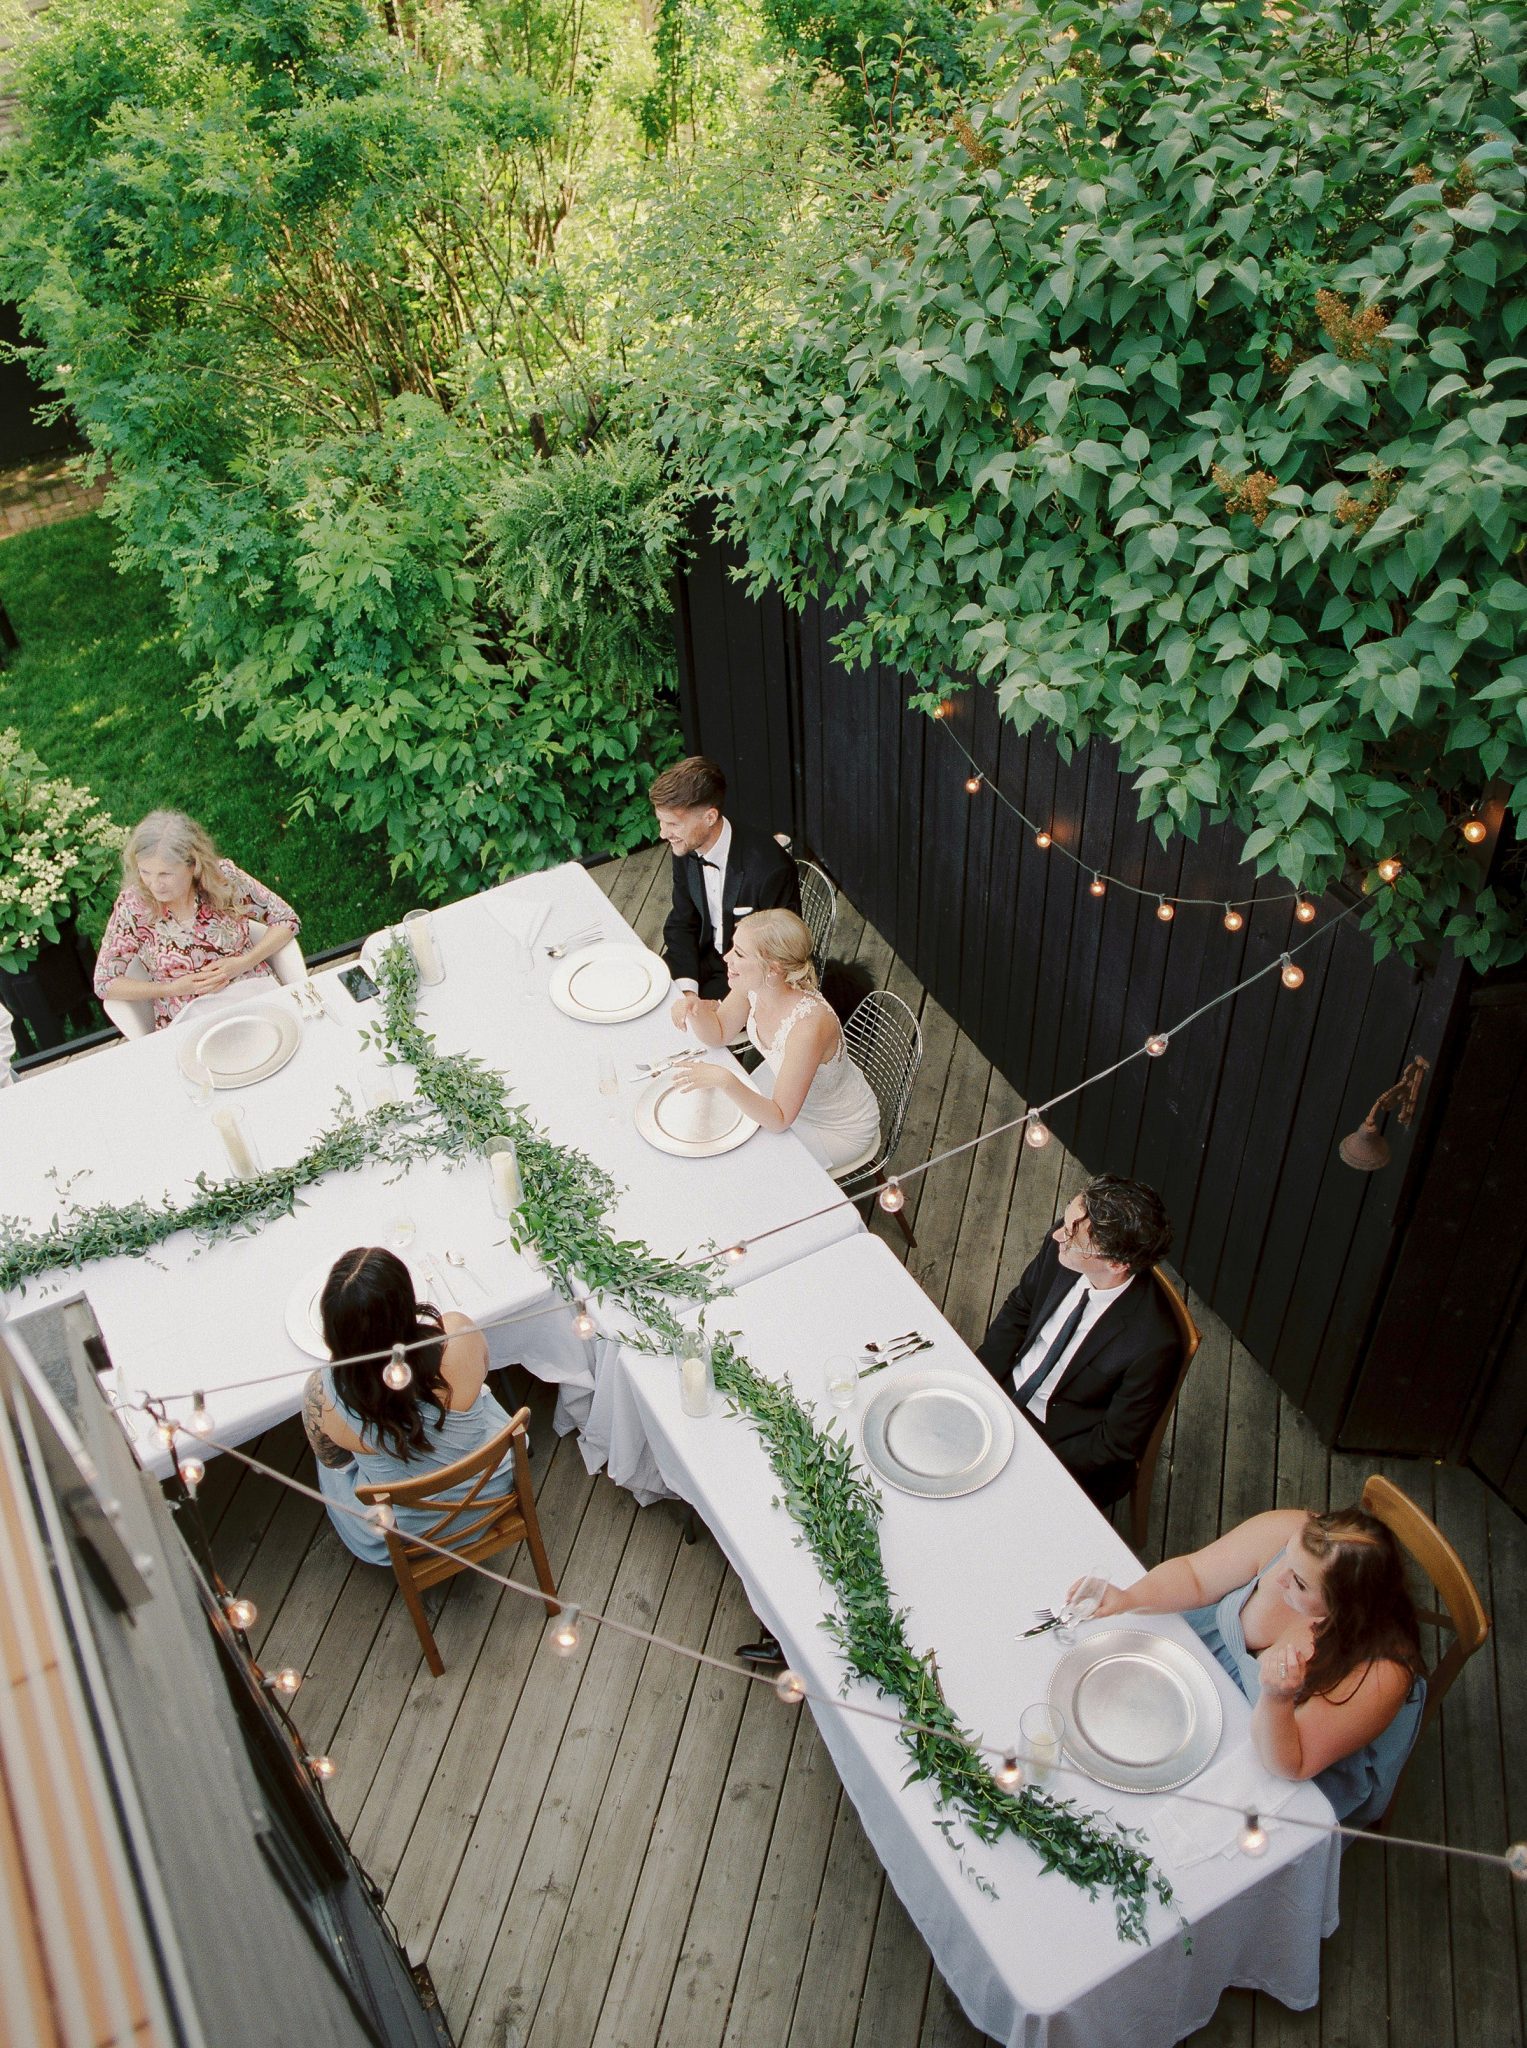 Backyard Wedding in Edmonton Alberta - featured on the Bronte Bride Blog